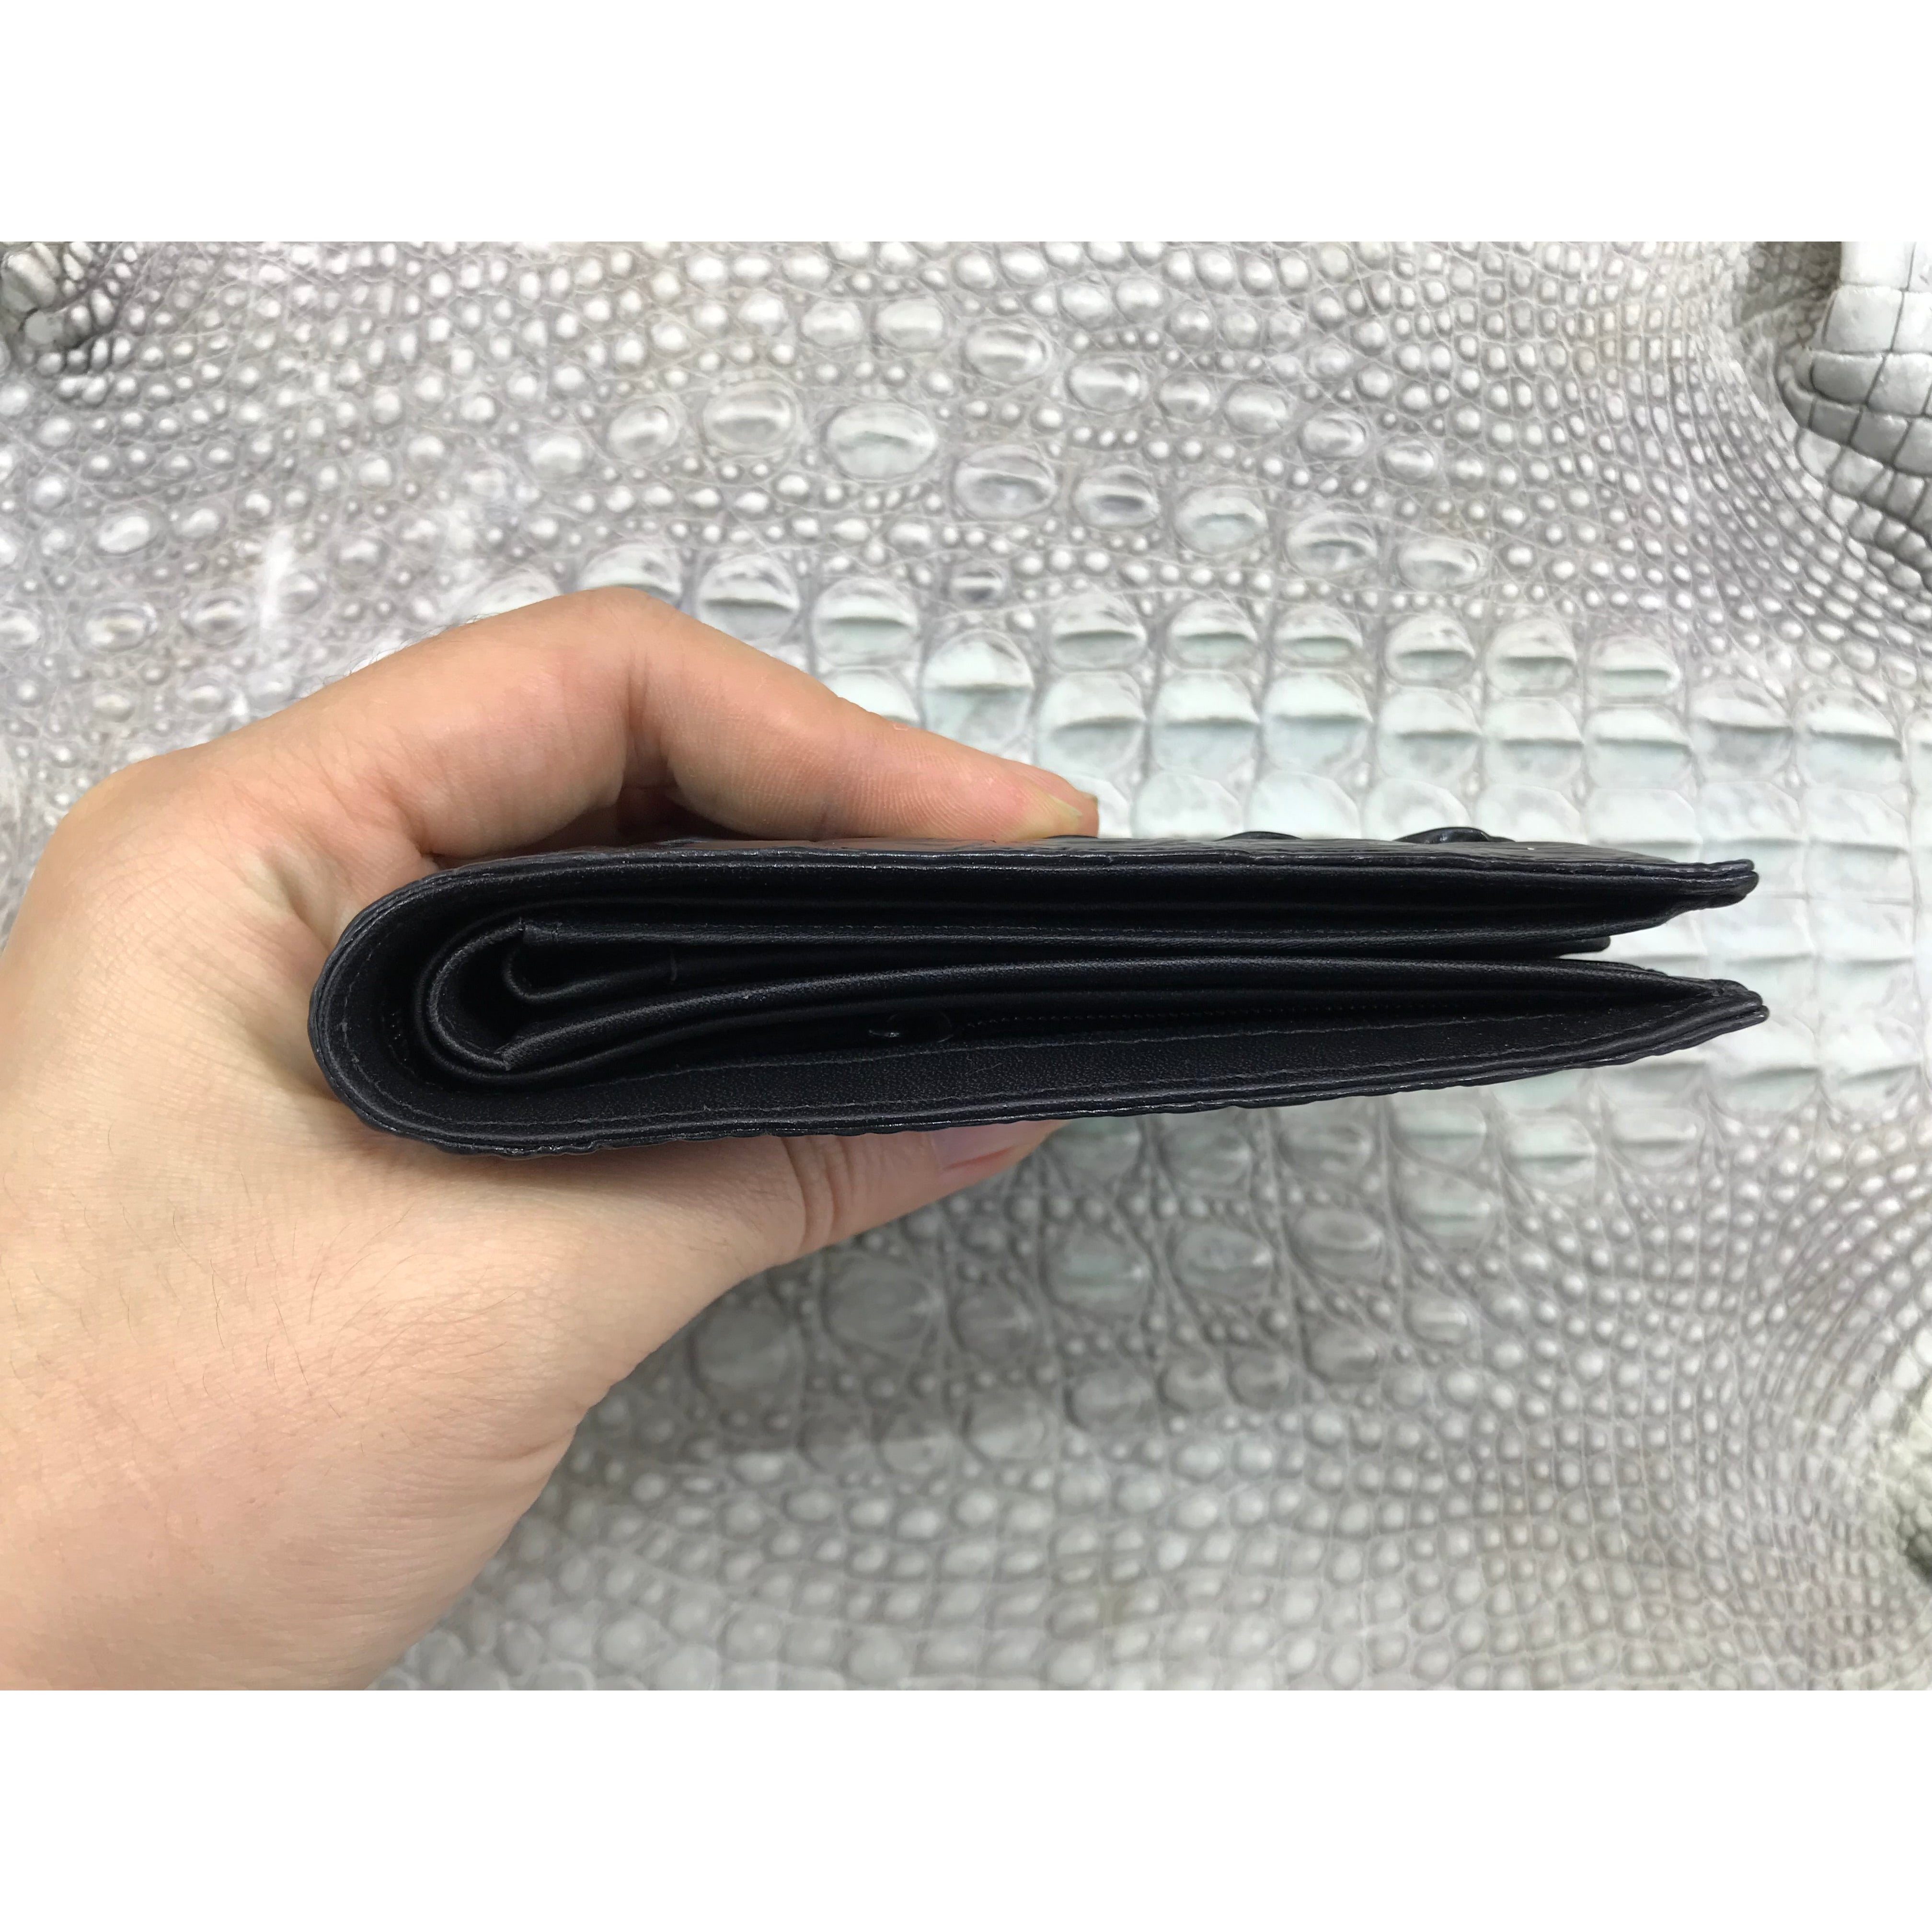 Black Alligator Horn Back Skin Bifold Wallet For Men | Handmade Crocodile Leather Wallet RFID Blocking | VL5655 - Vinacreations